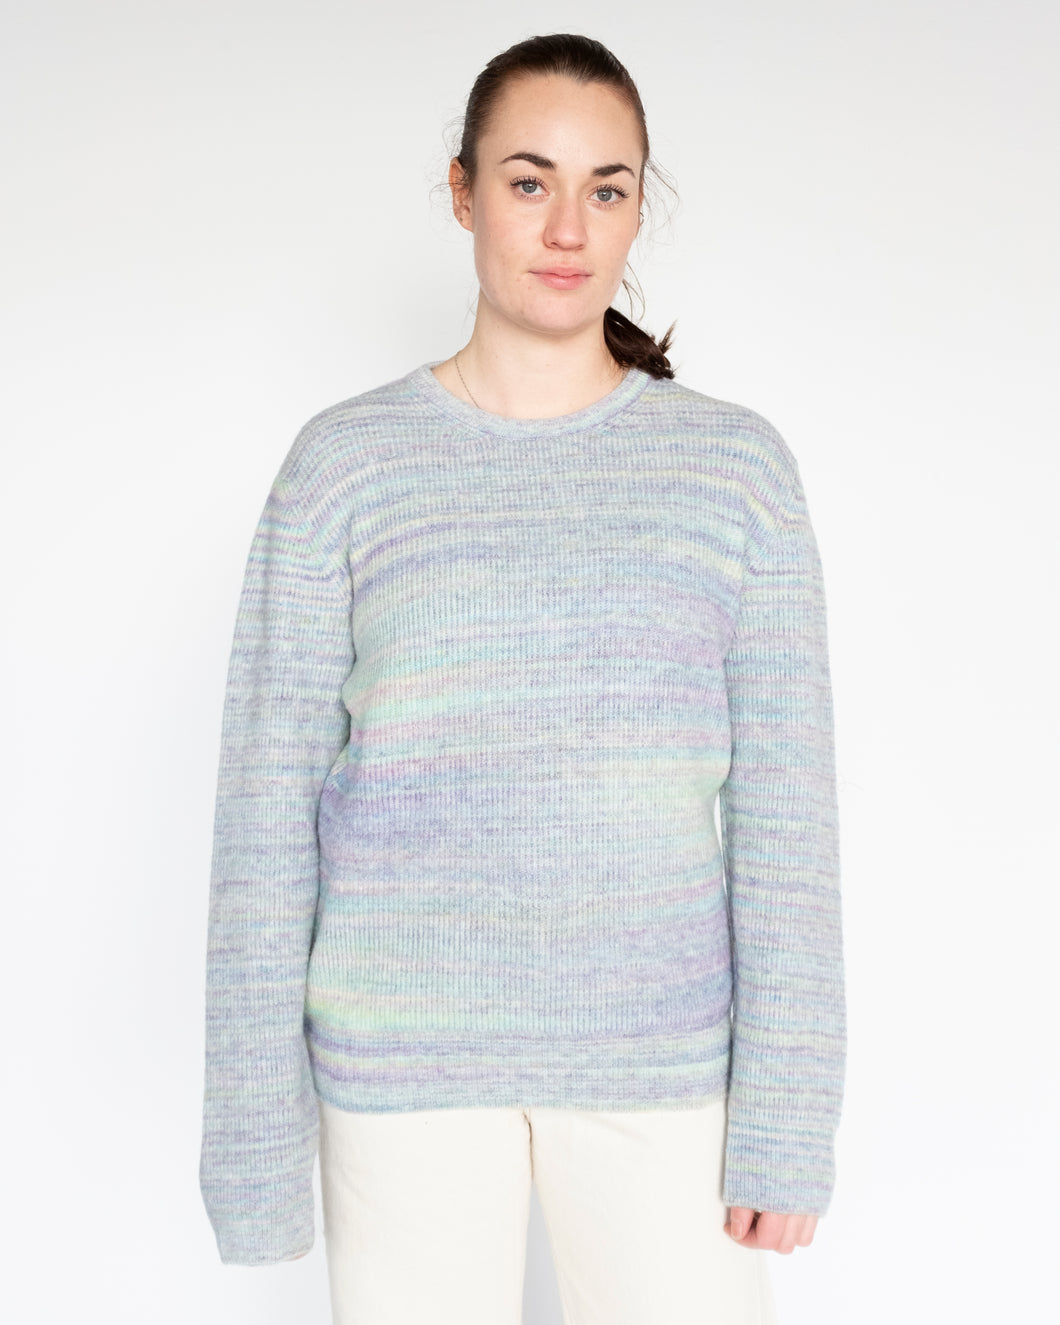 A.P.C. - Elsa Sweater in multicolor - front